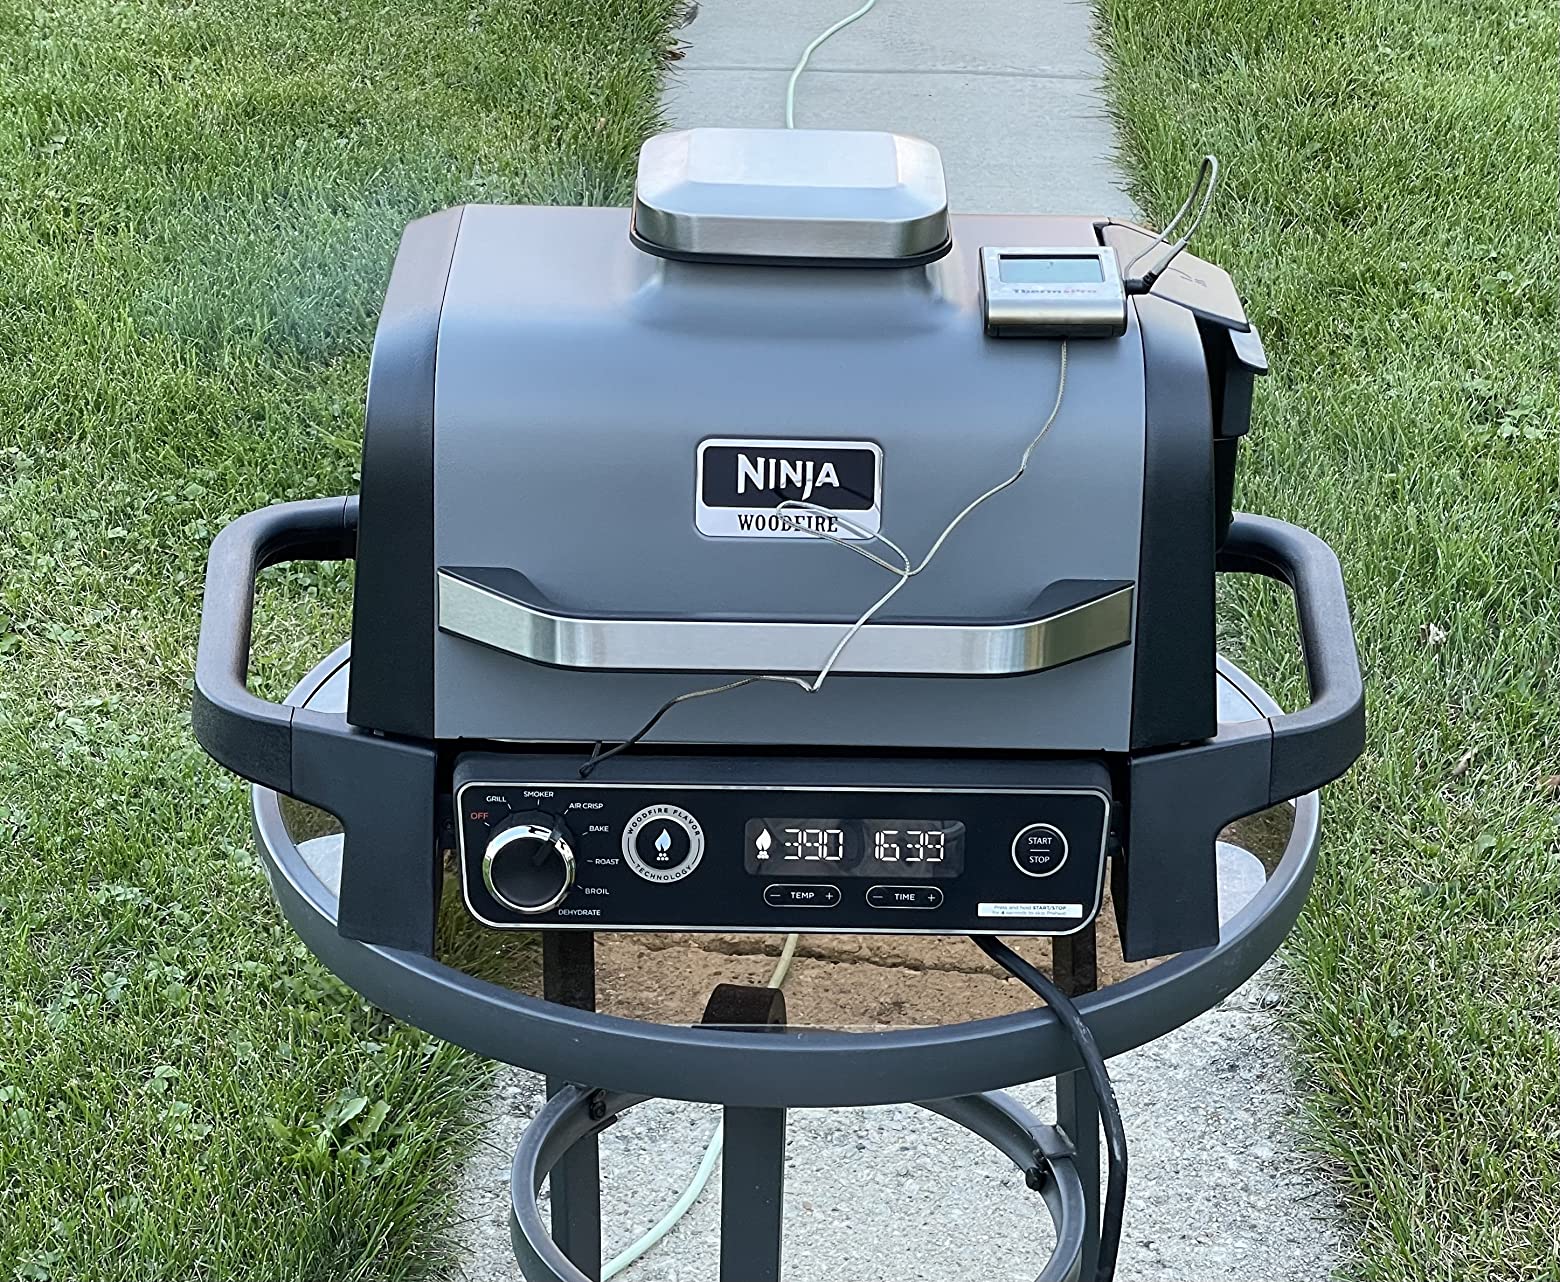 Ninja OG701 Woodfire Outdoor Grill, 7-in-1 Master Grill, BBQ Smoker ...